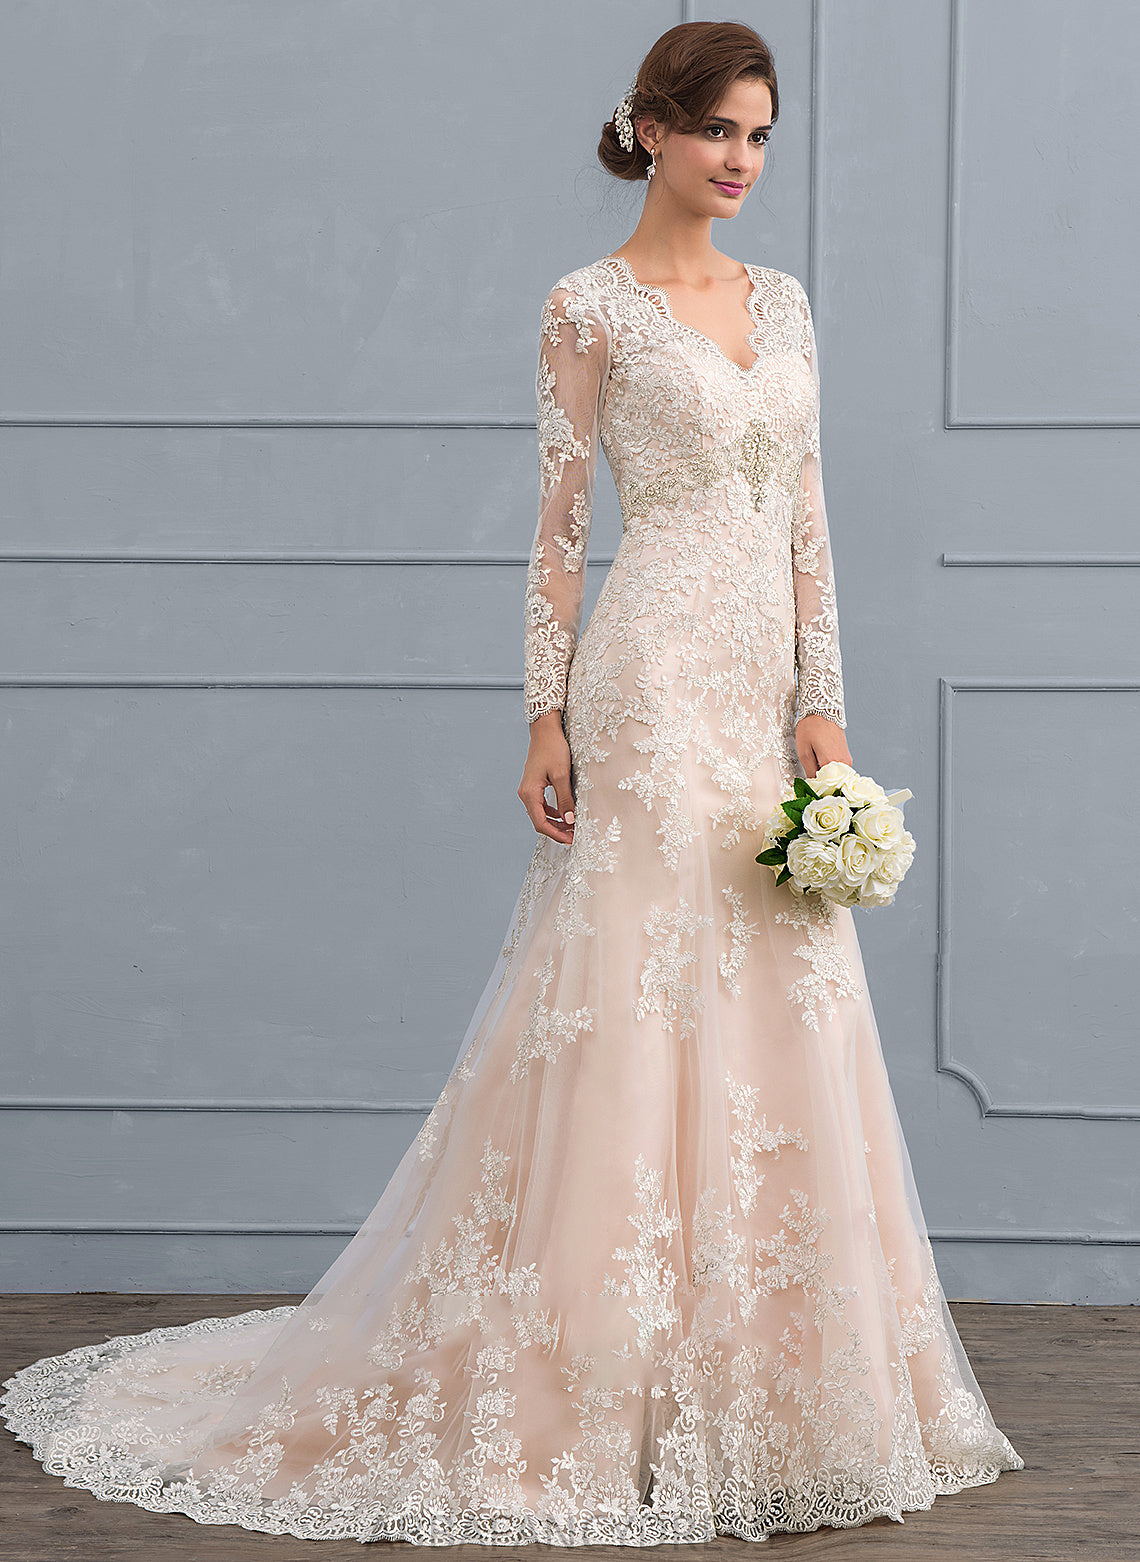 Tulle Lace Wedding Train Court Trumpet/Mermaid Wedding Dresses V-neck Eva Dress